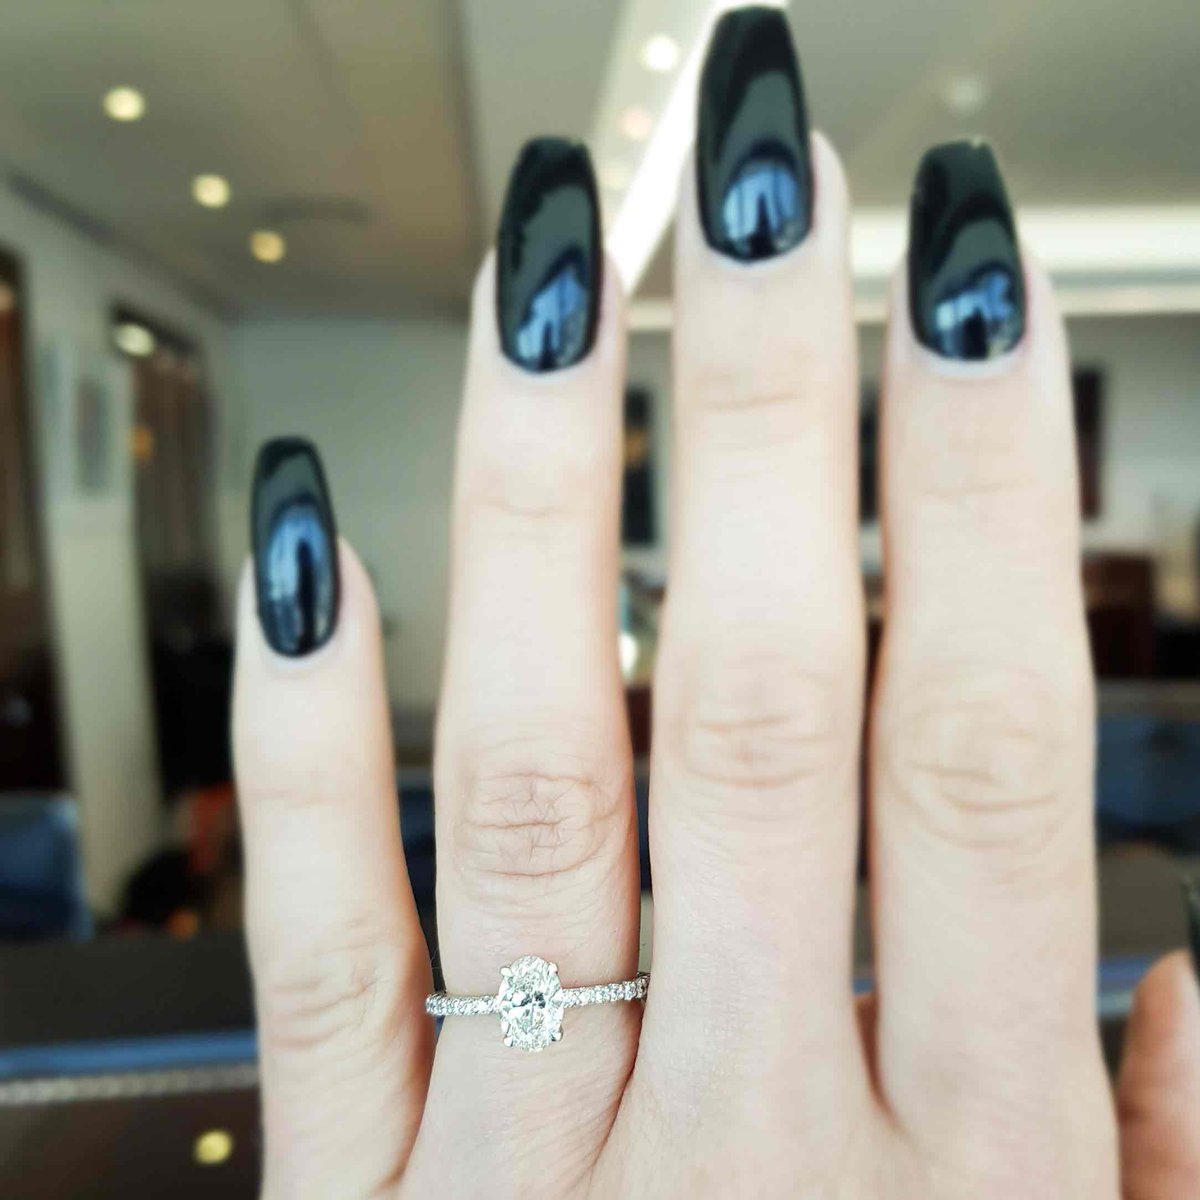 admiring this 1,04ct oval this morning😍

#thediamondshoppe #engagementrings #engagement #diamondring #lovejewelery #explorecapetown #southafrica #wedding #proposal #gettingengaged #jewellery #shesaidyes #instajewellery #jewelleryofinstagram